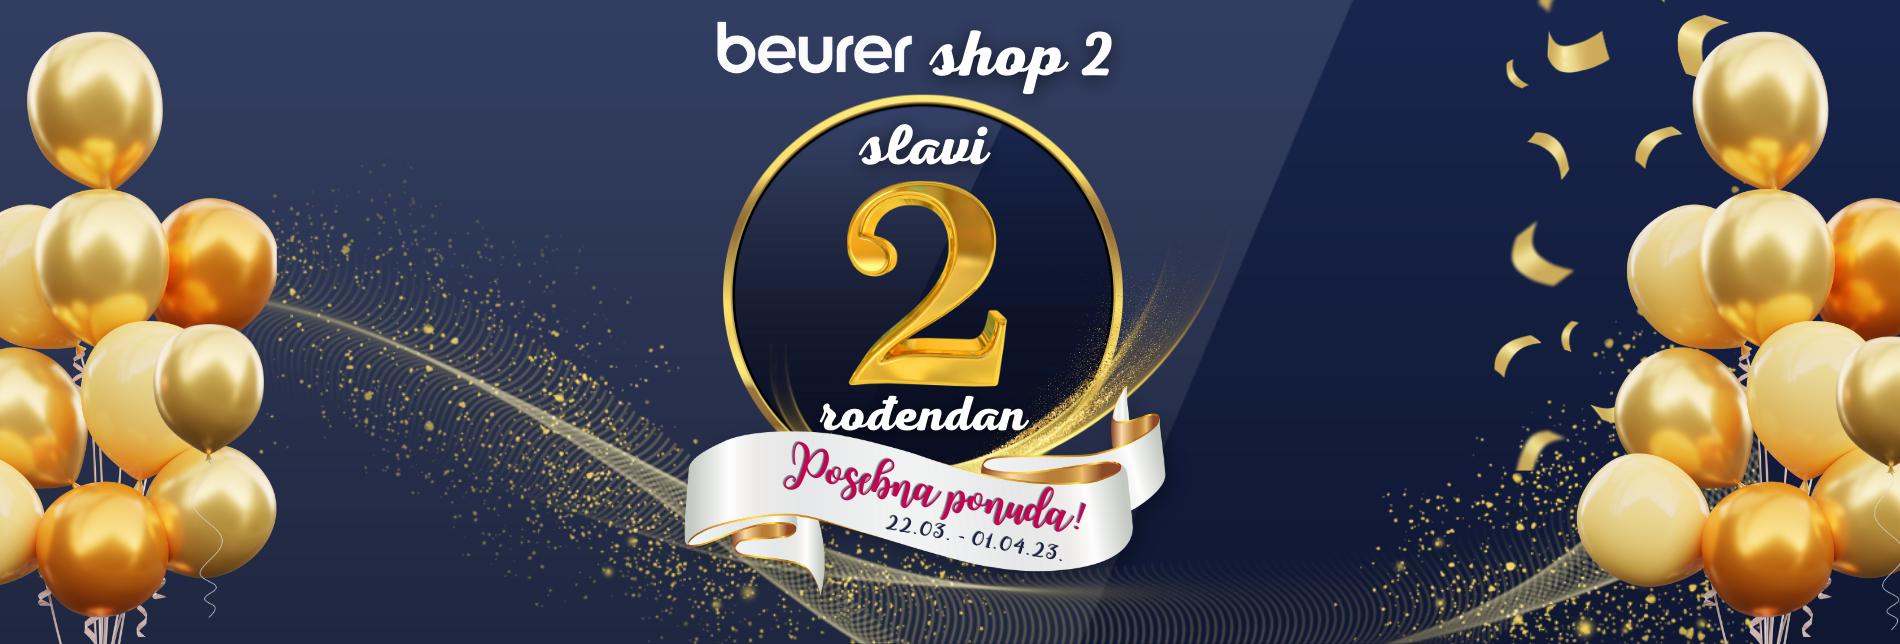 Beurer shop 2